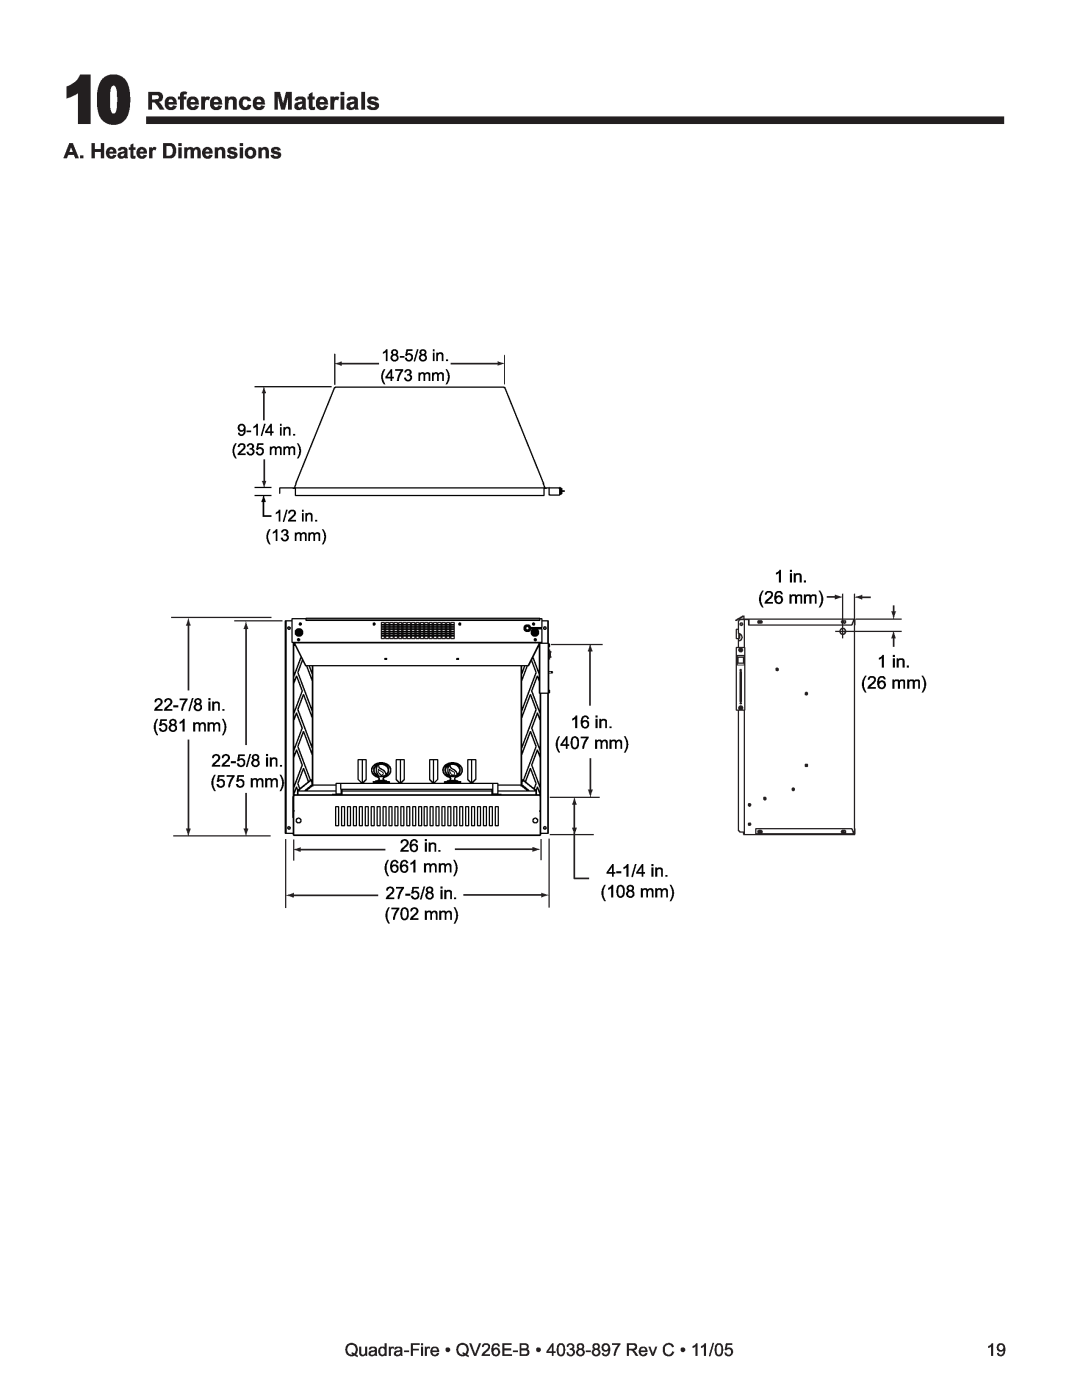 Quadra-Fire QV26E-B owner manual Reference Materials, A. Heater Dimensions 